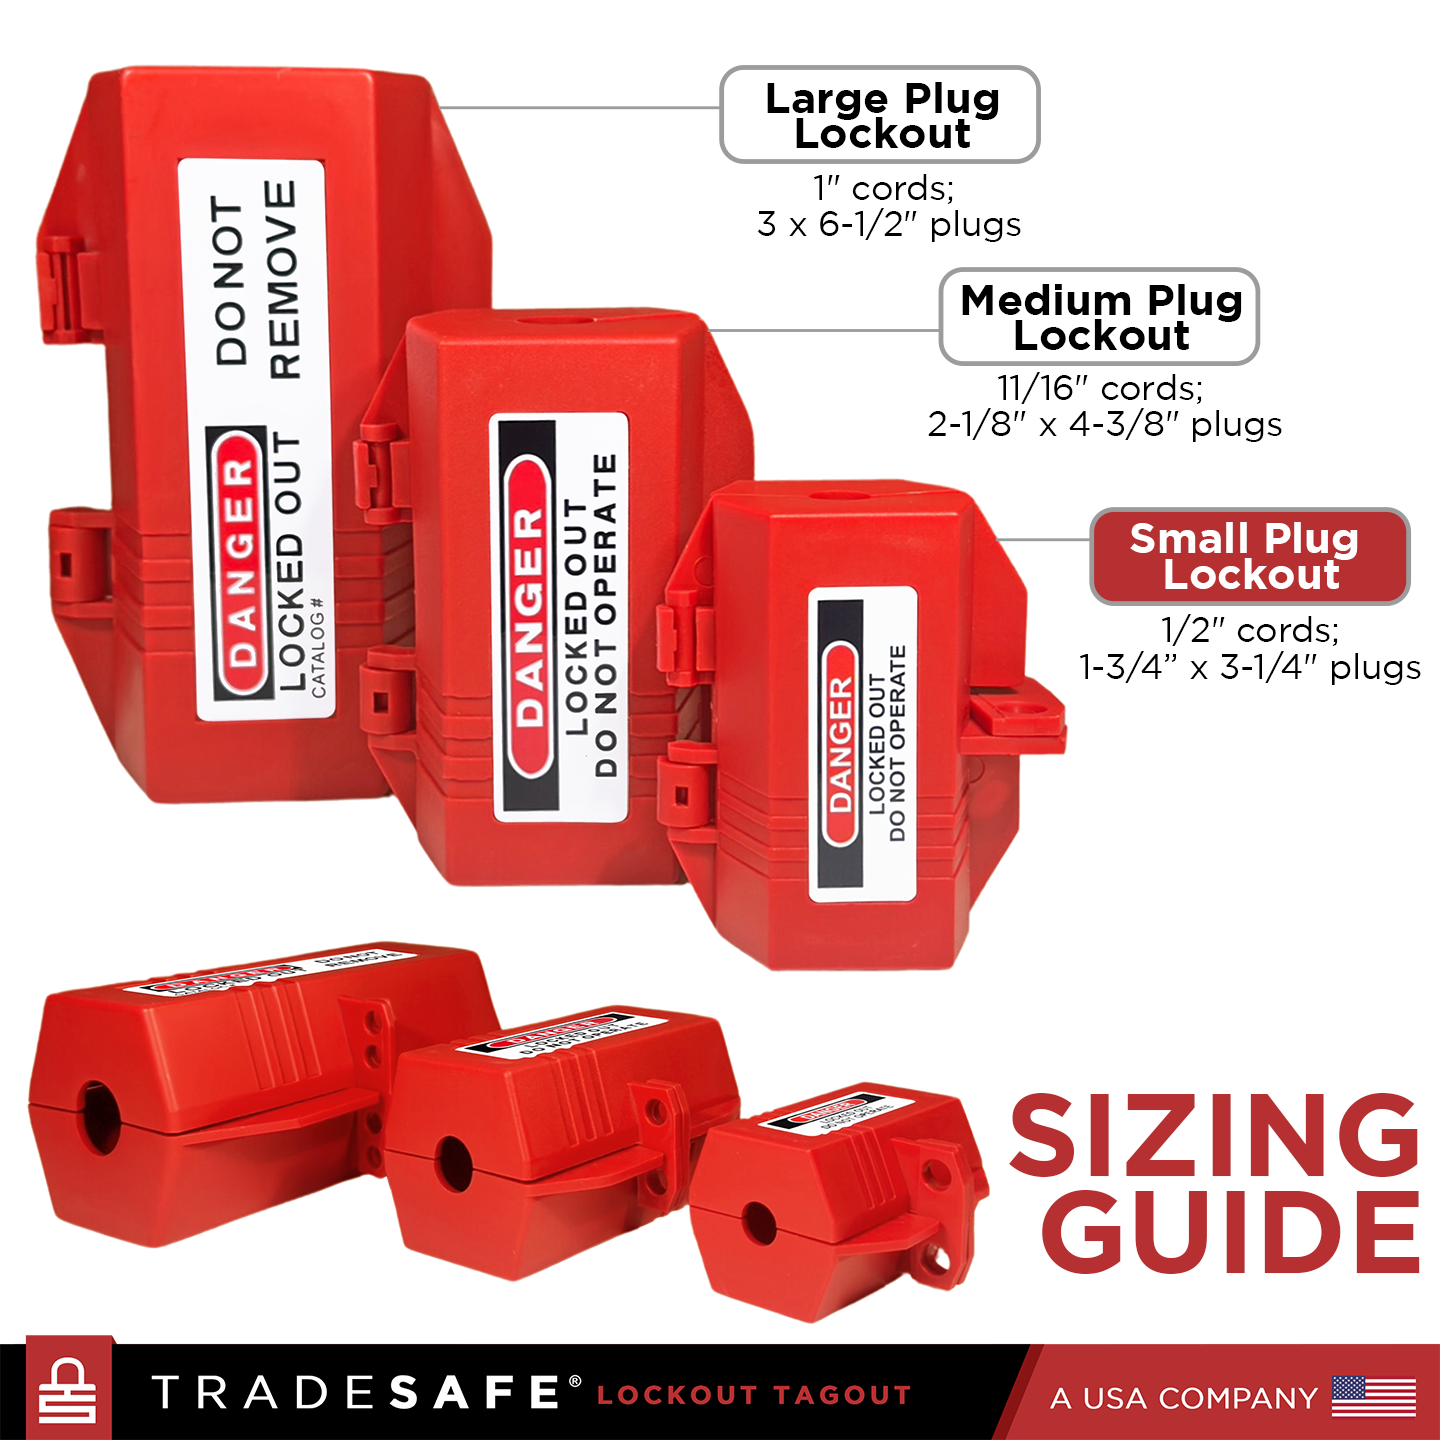 sizing guide of tradesafe 3 plug lockout tagout